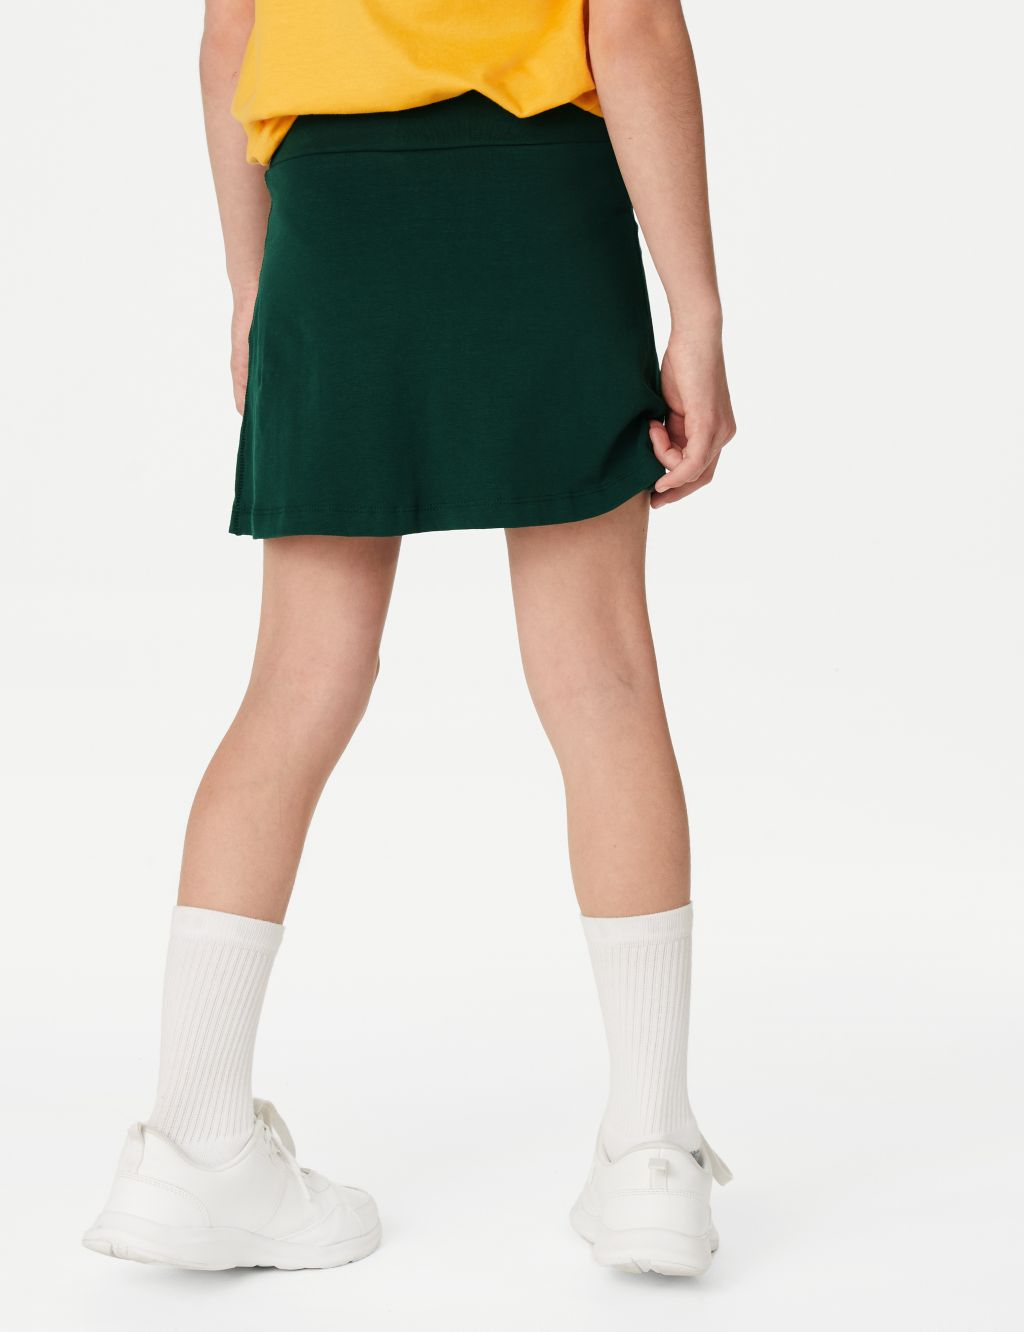 Girls' Cotton with Stretch Sports Skorts (2-16 Yrs) image 3